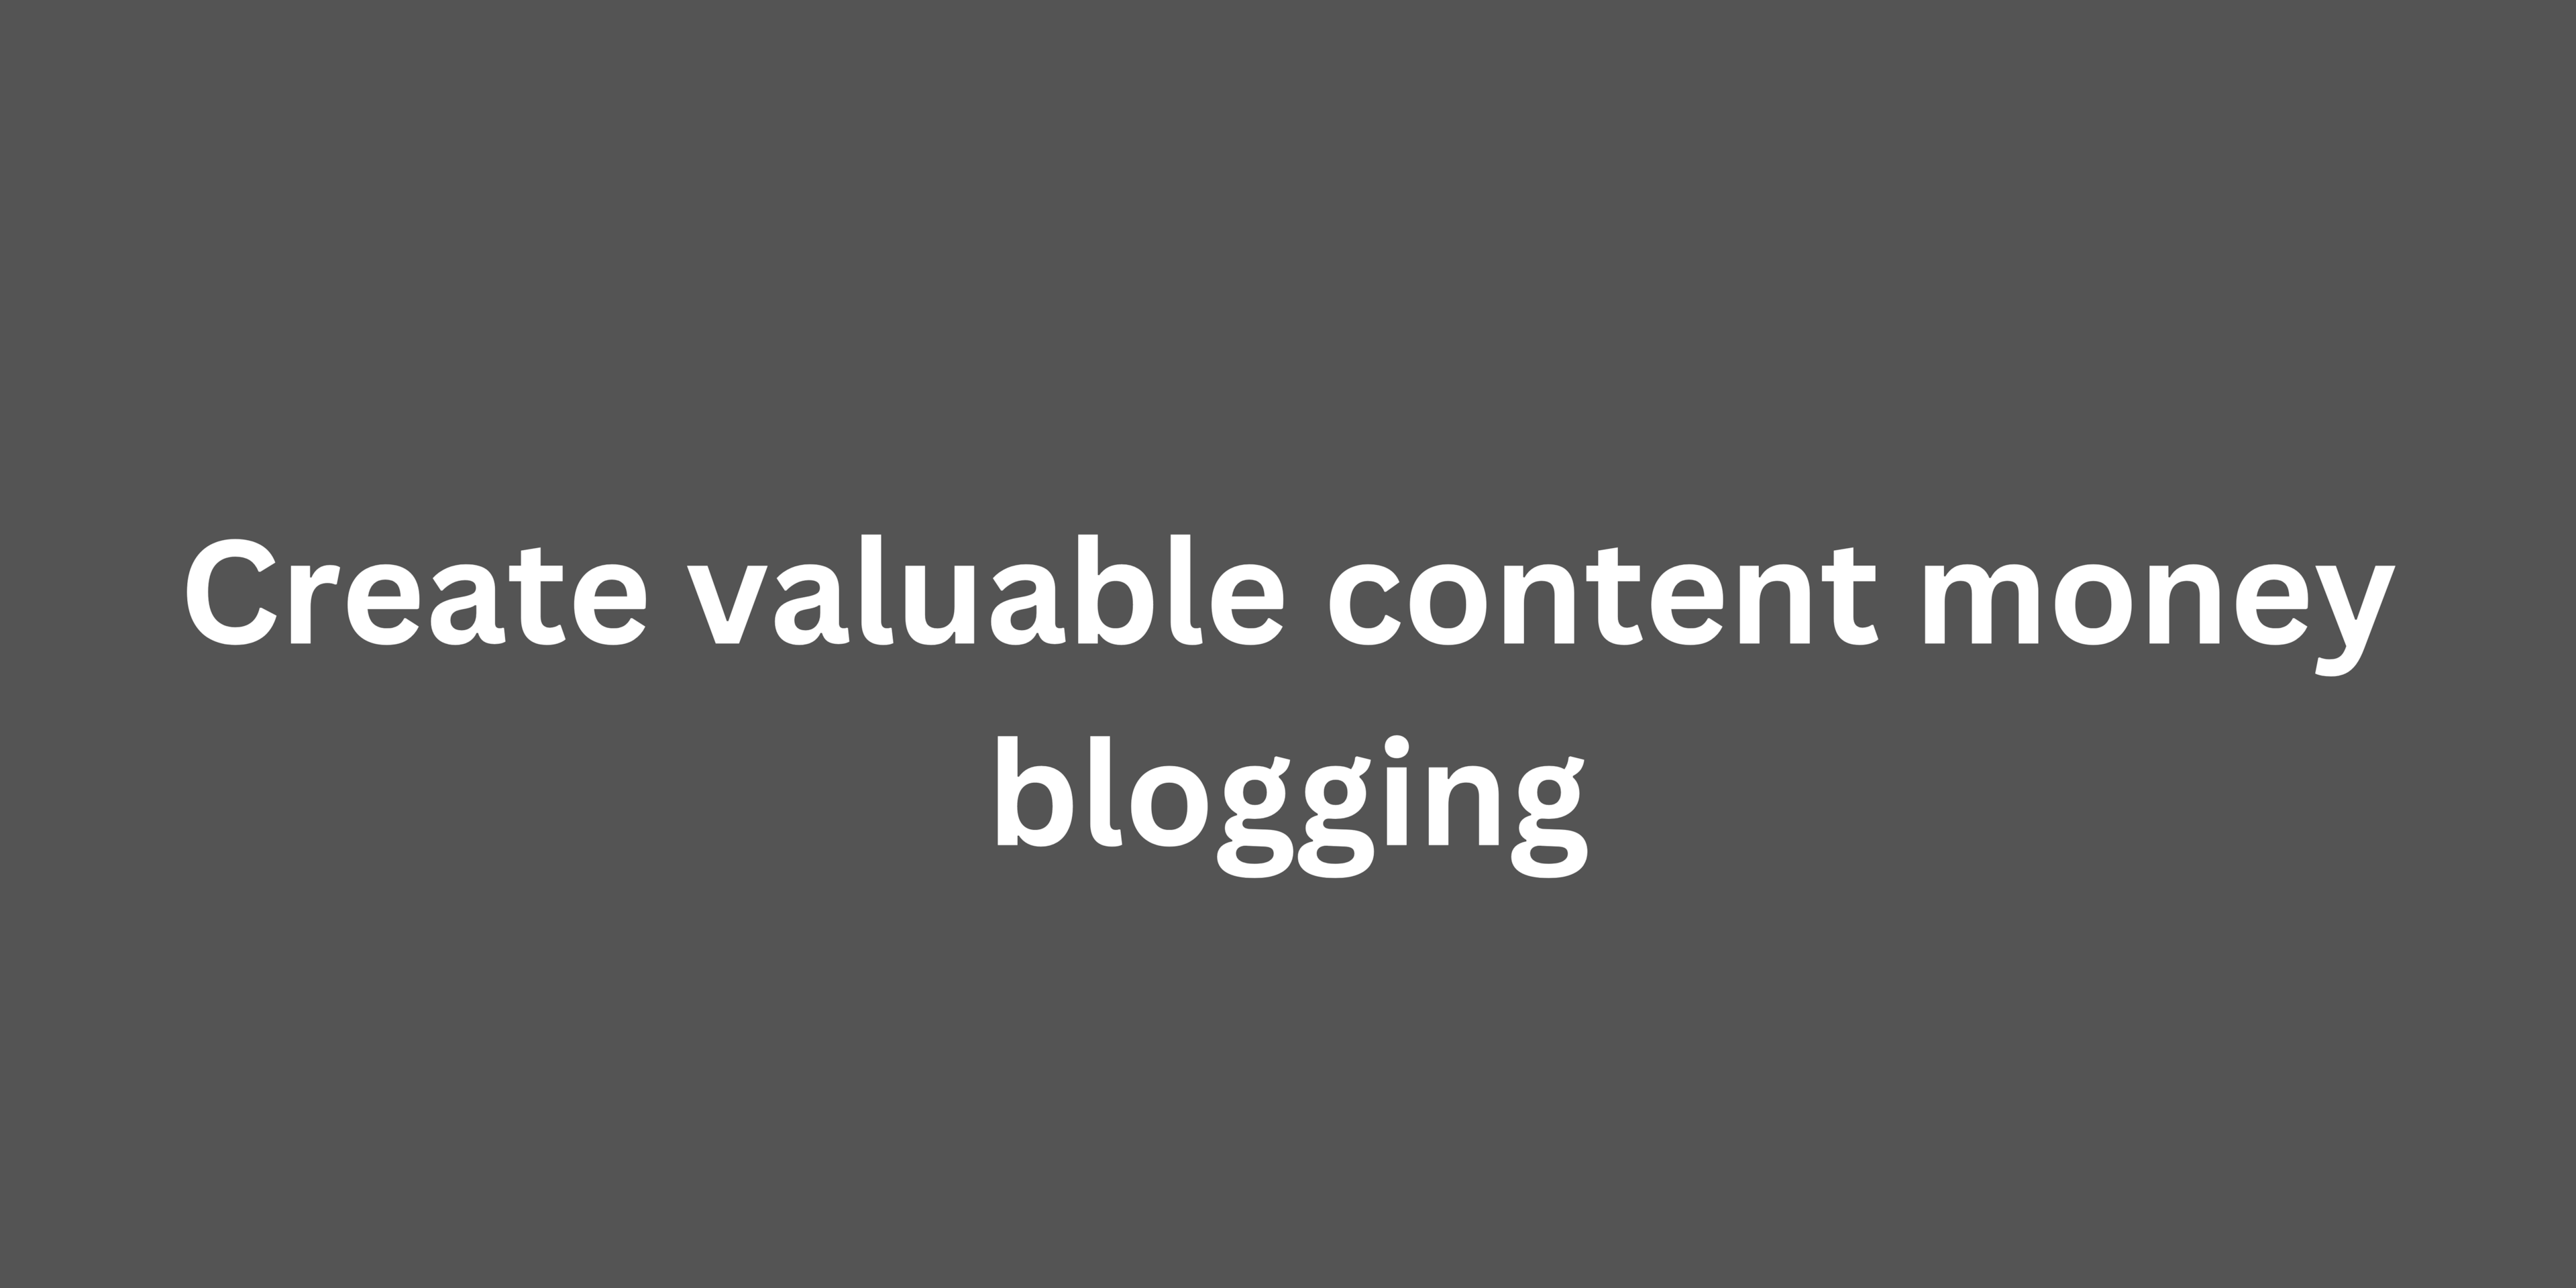 Create valuable content money blogging: